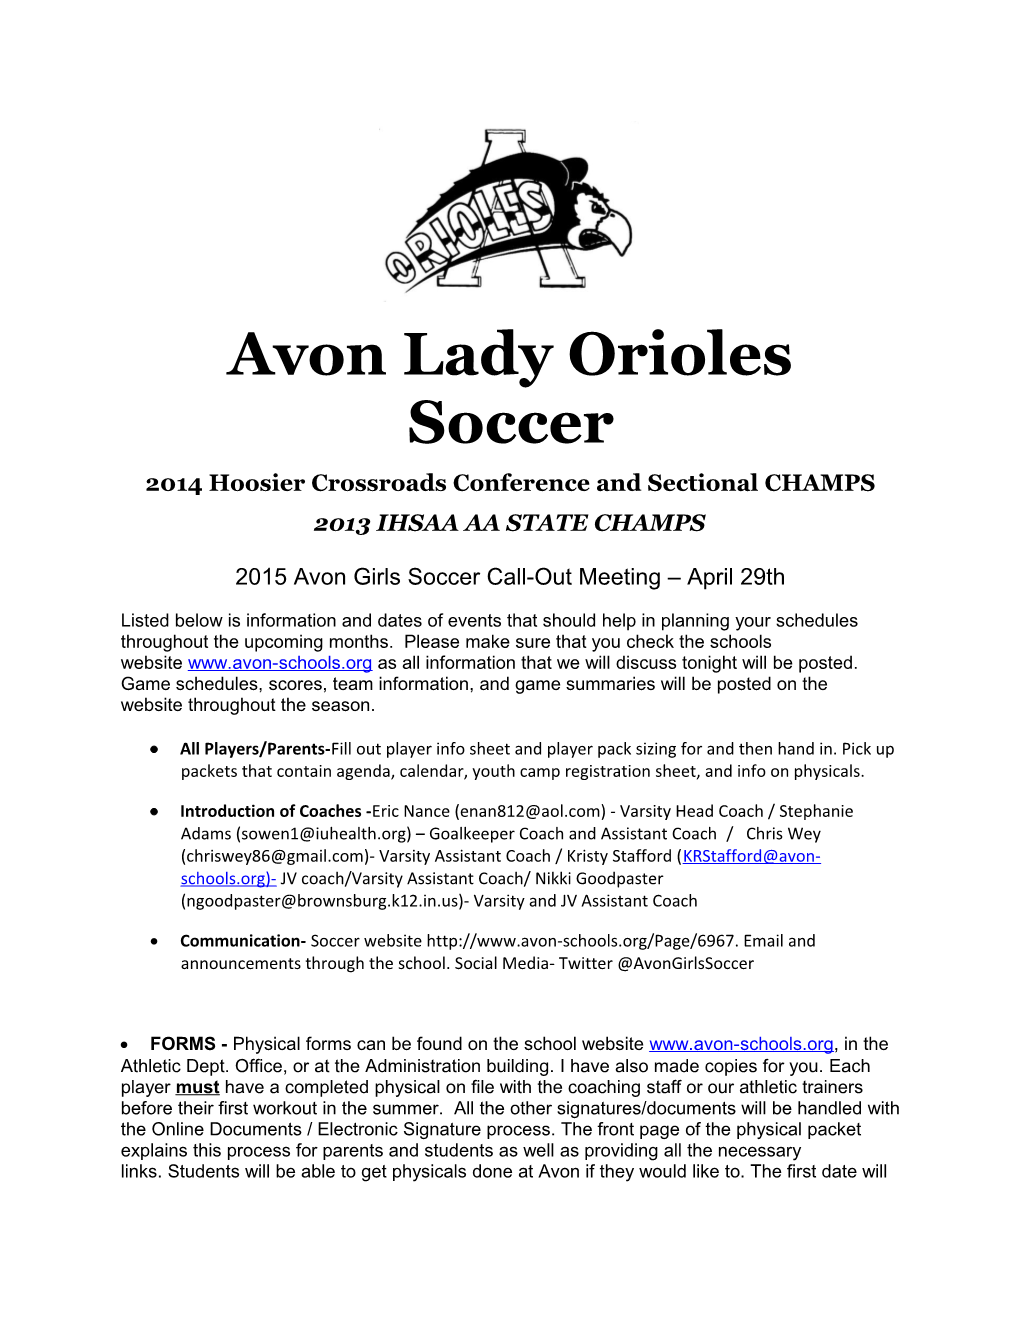 Avon Lady Orioles Soccer